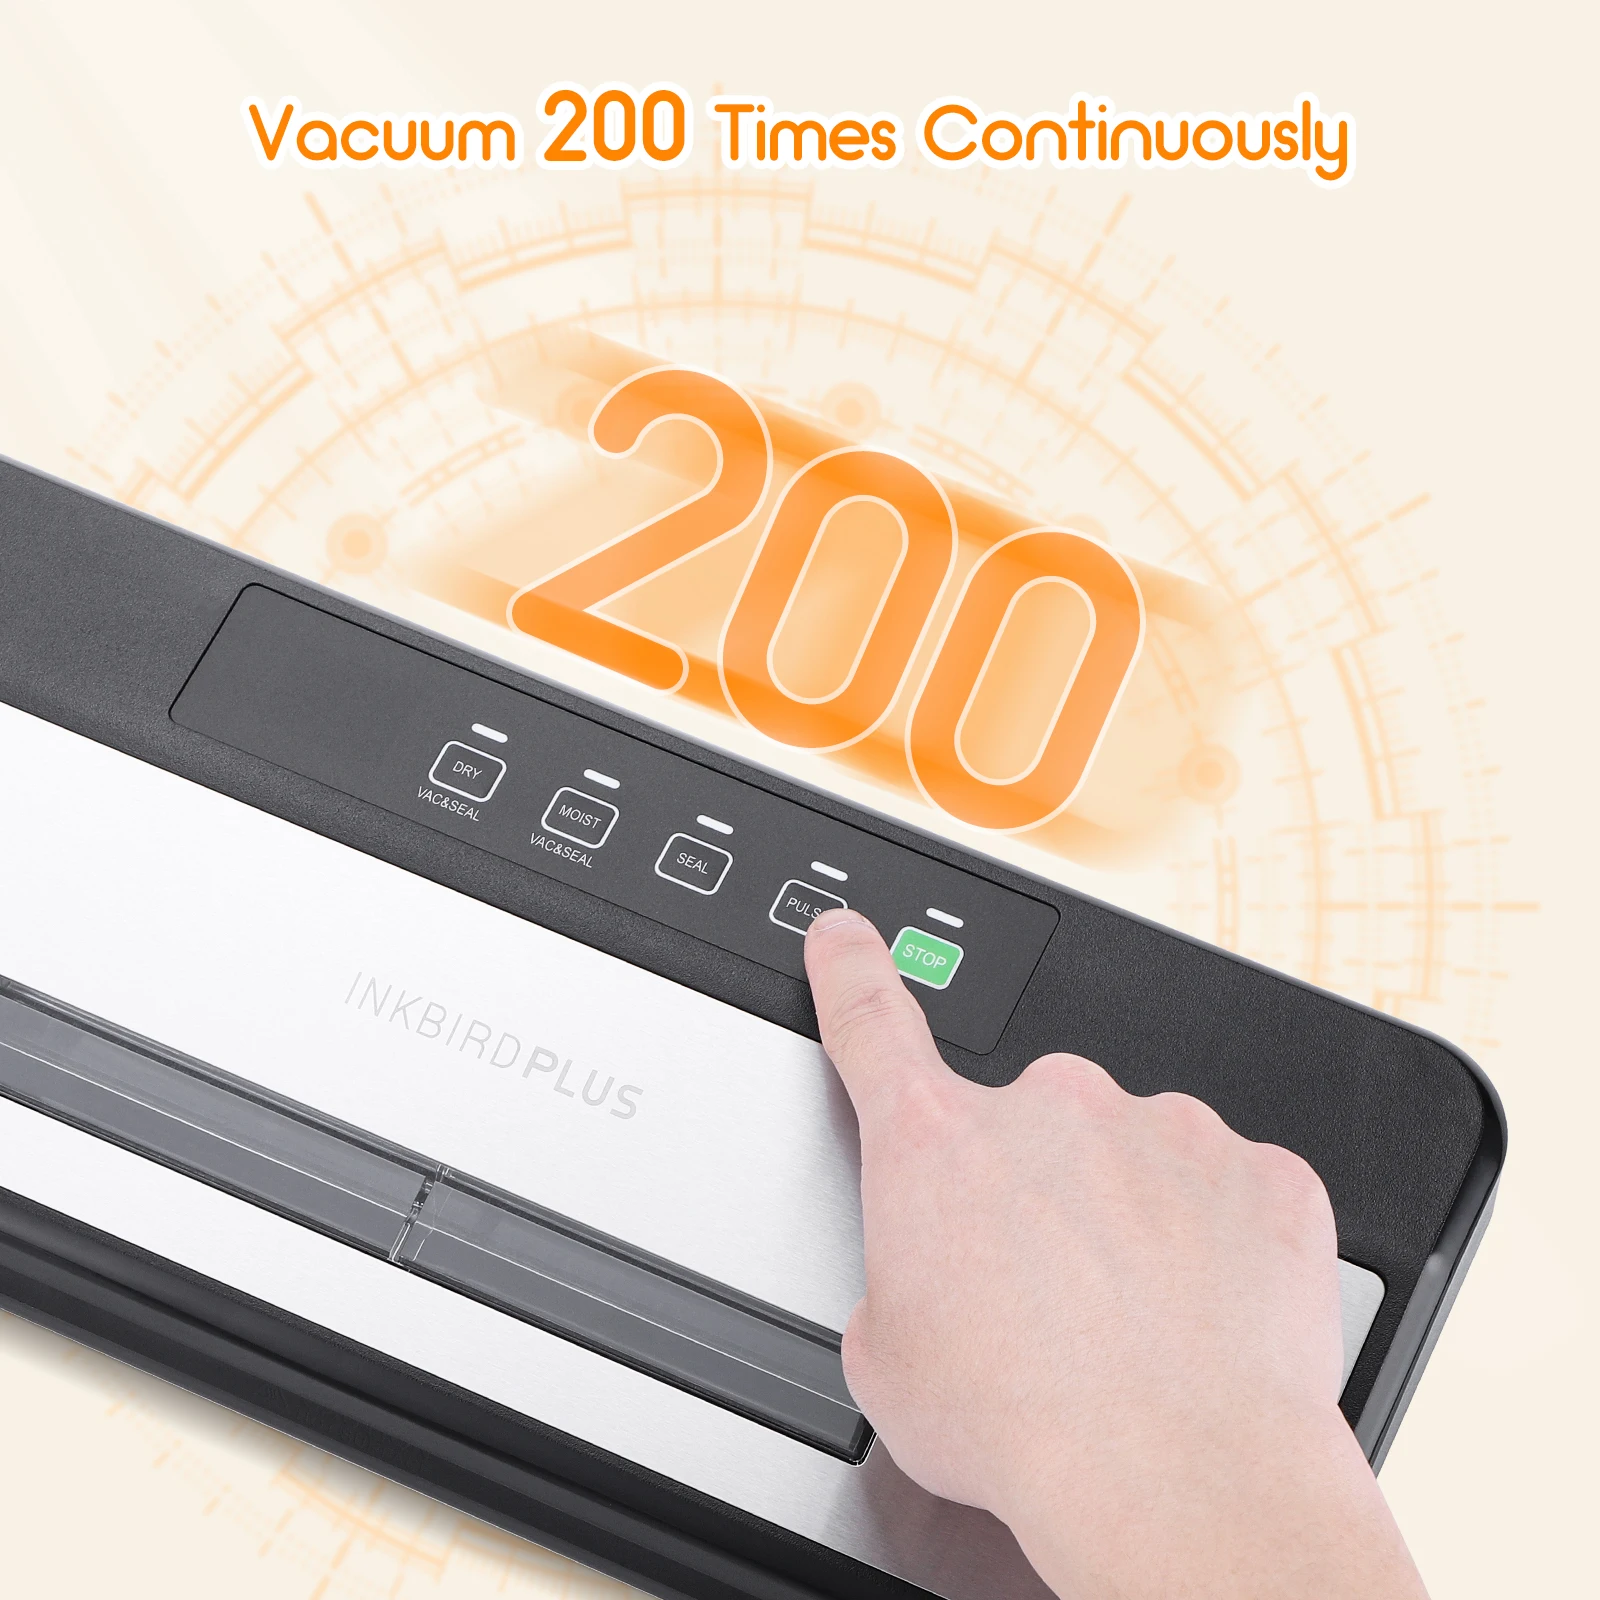 Vacuum Sealer INK-VS03